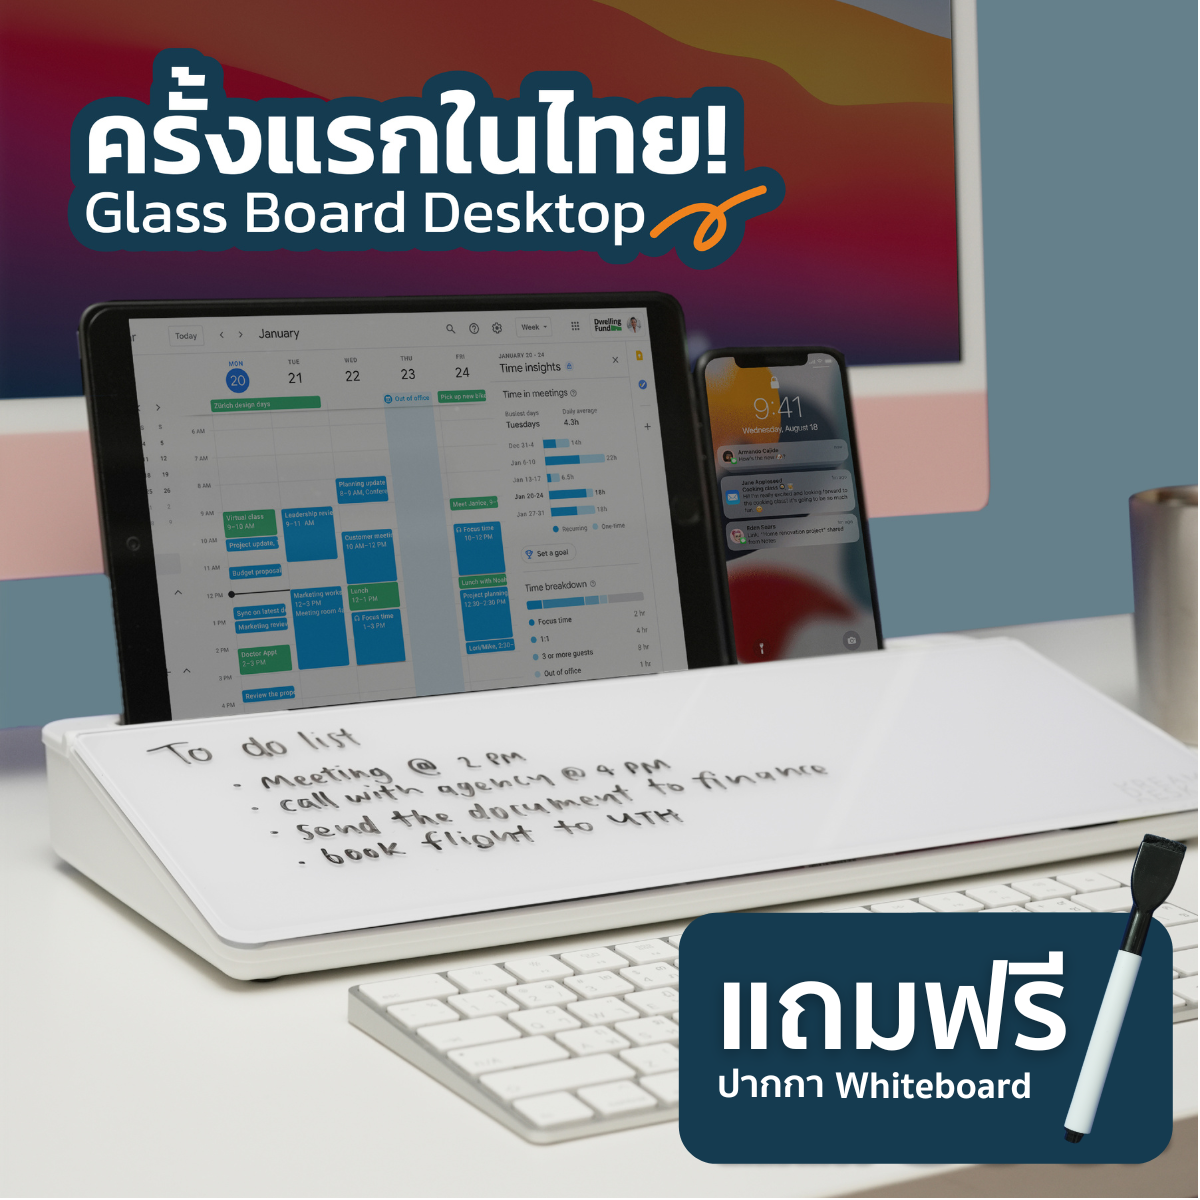 Glass Board Desktop ไวท์บอร์ดกระจกตั้งโต๊ะ By DreamDesk